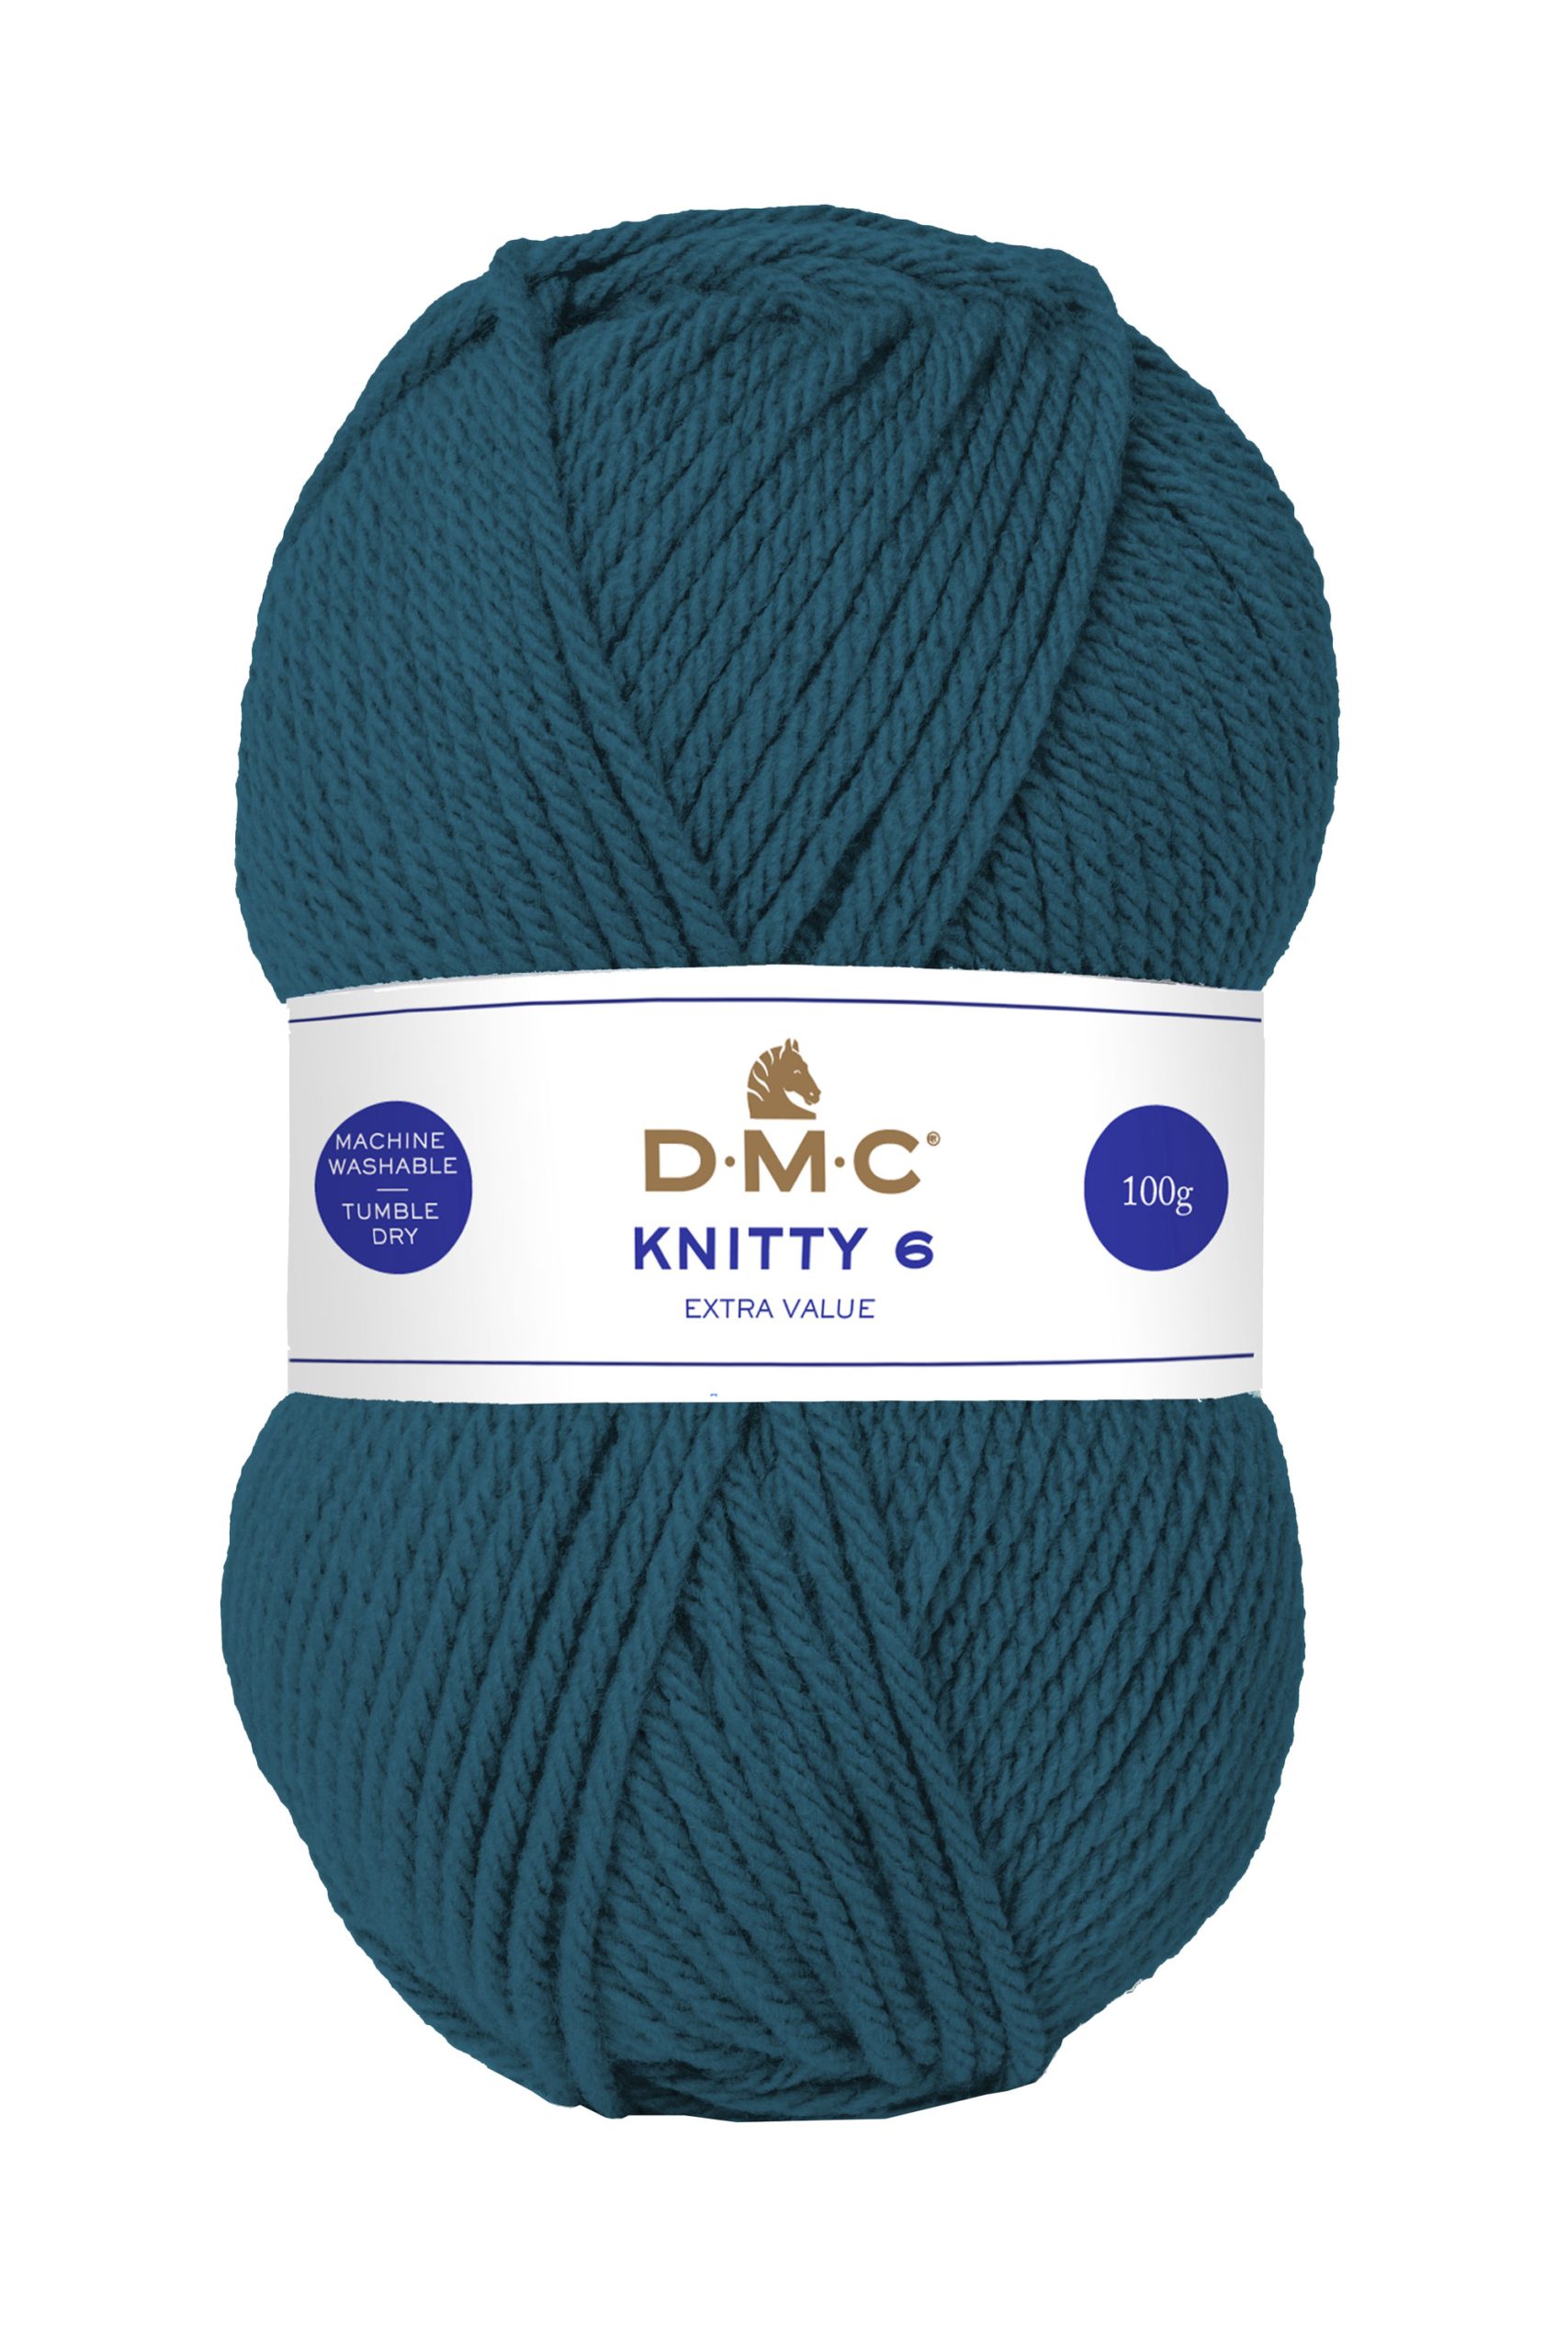 Lana Dmc Knitty 6 Colore 691